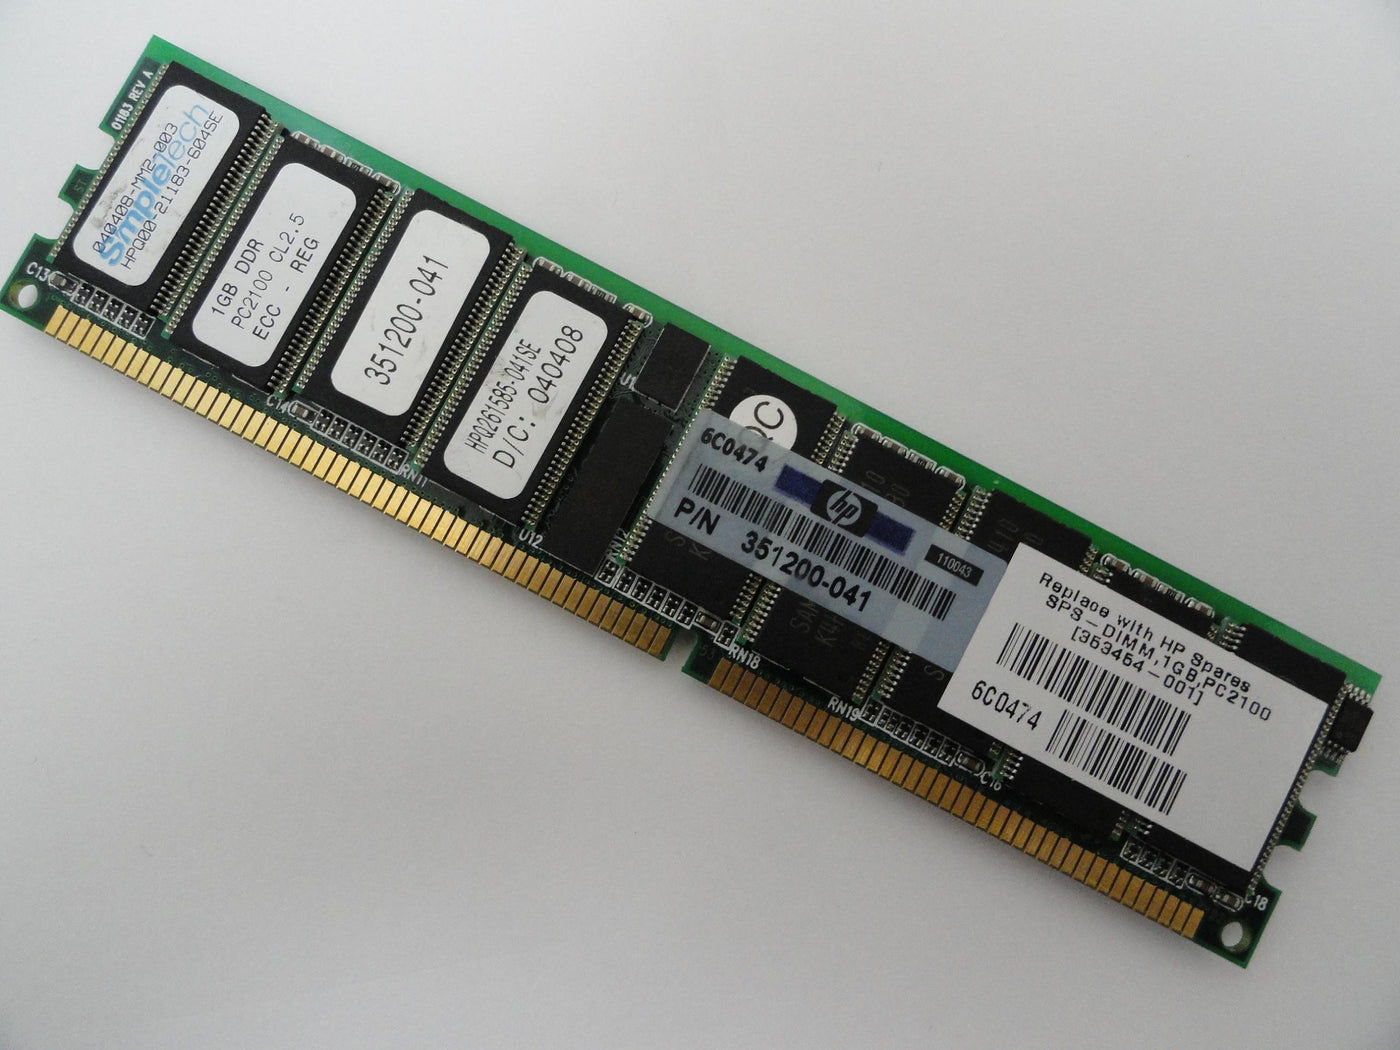 PR17478_HPQ00-21183-604SE_SimpleTech Compaq 1Gb DDR PC2100 CL2.5 ECC Reg RAM - Image4